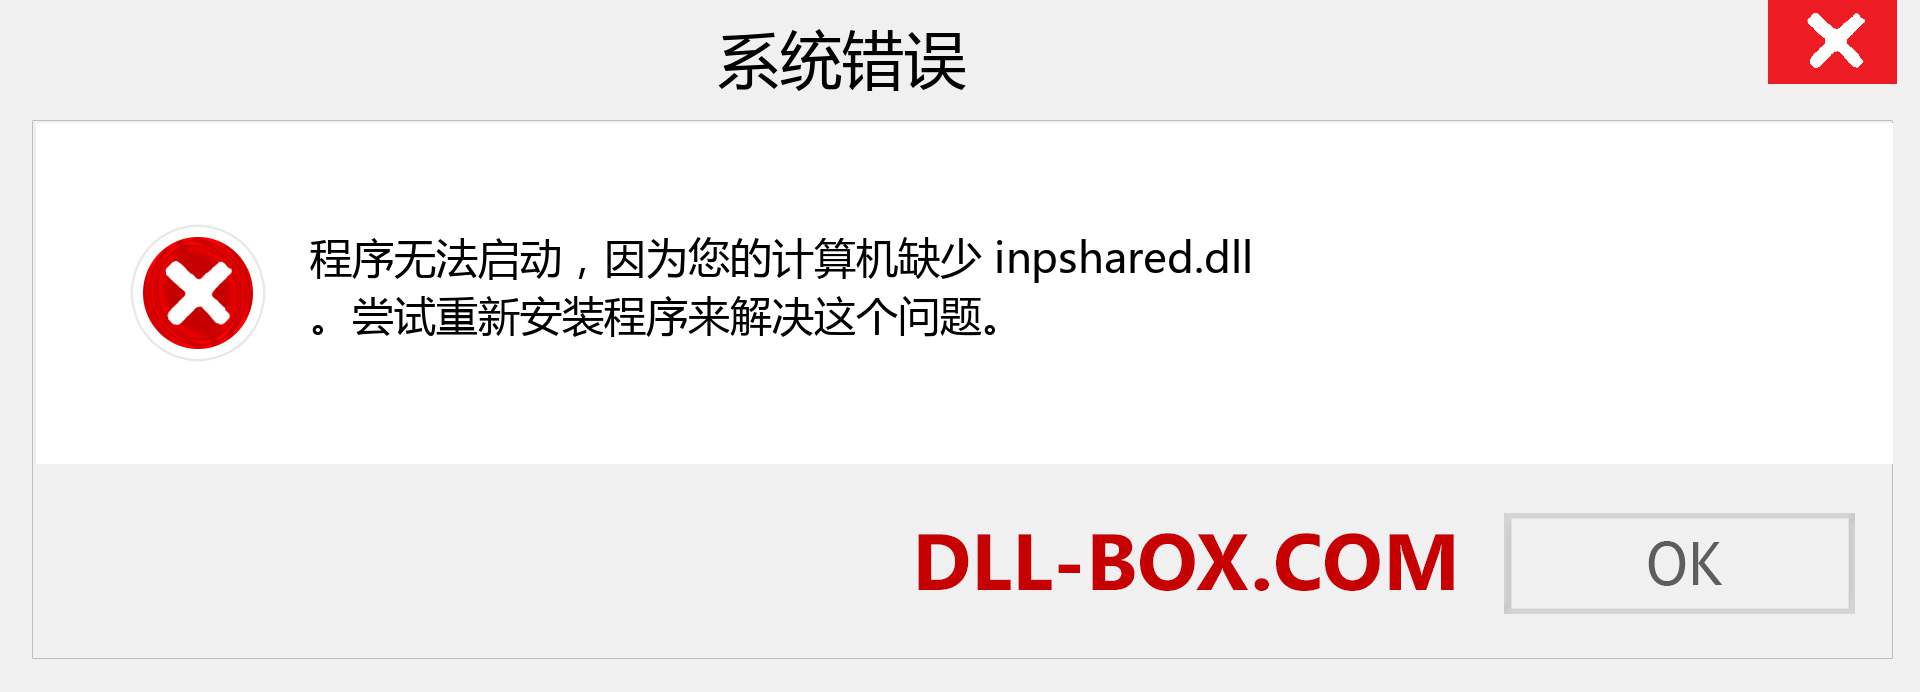 inpshared.dll 文件丢失？。 适用于 Windows 7、8、10 的下载 - 修复 Windows、照片、图像上的 inpshared dll 丢失错误